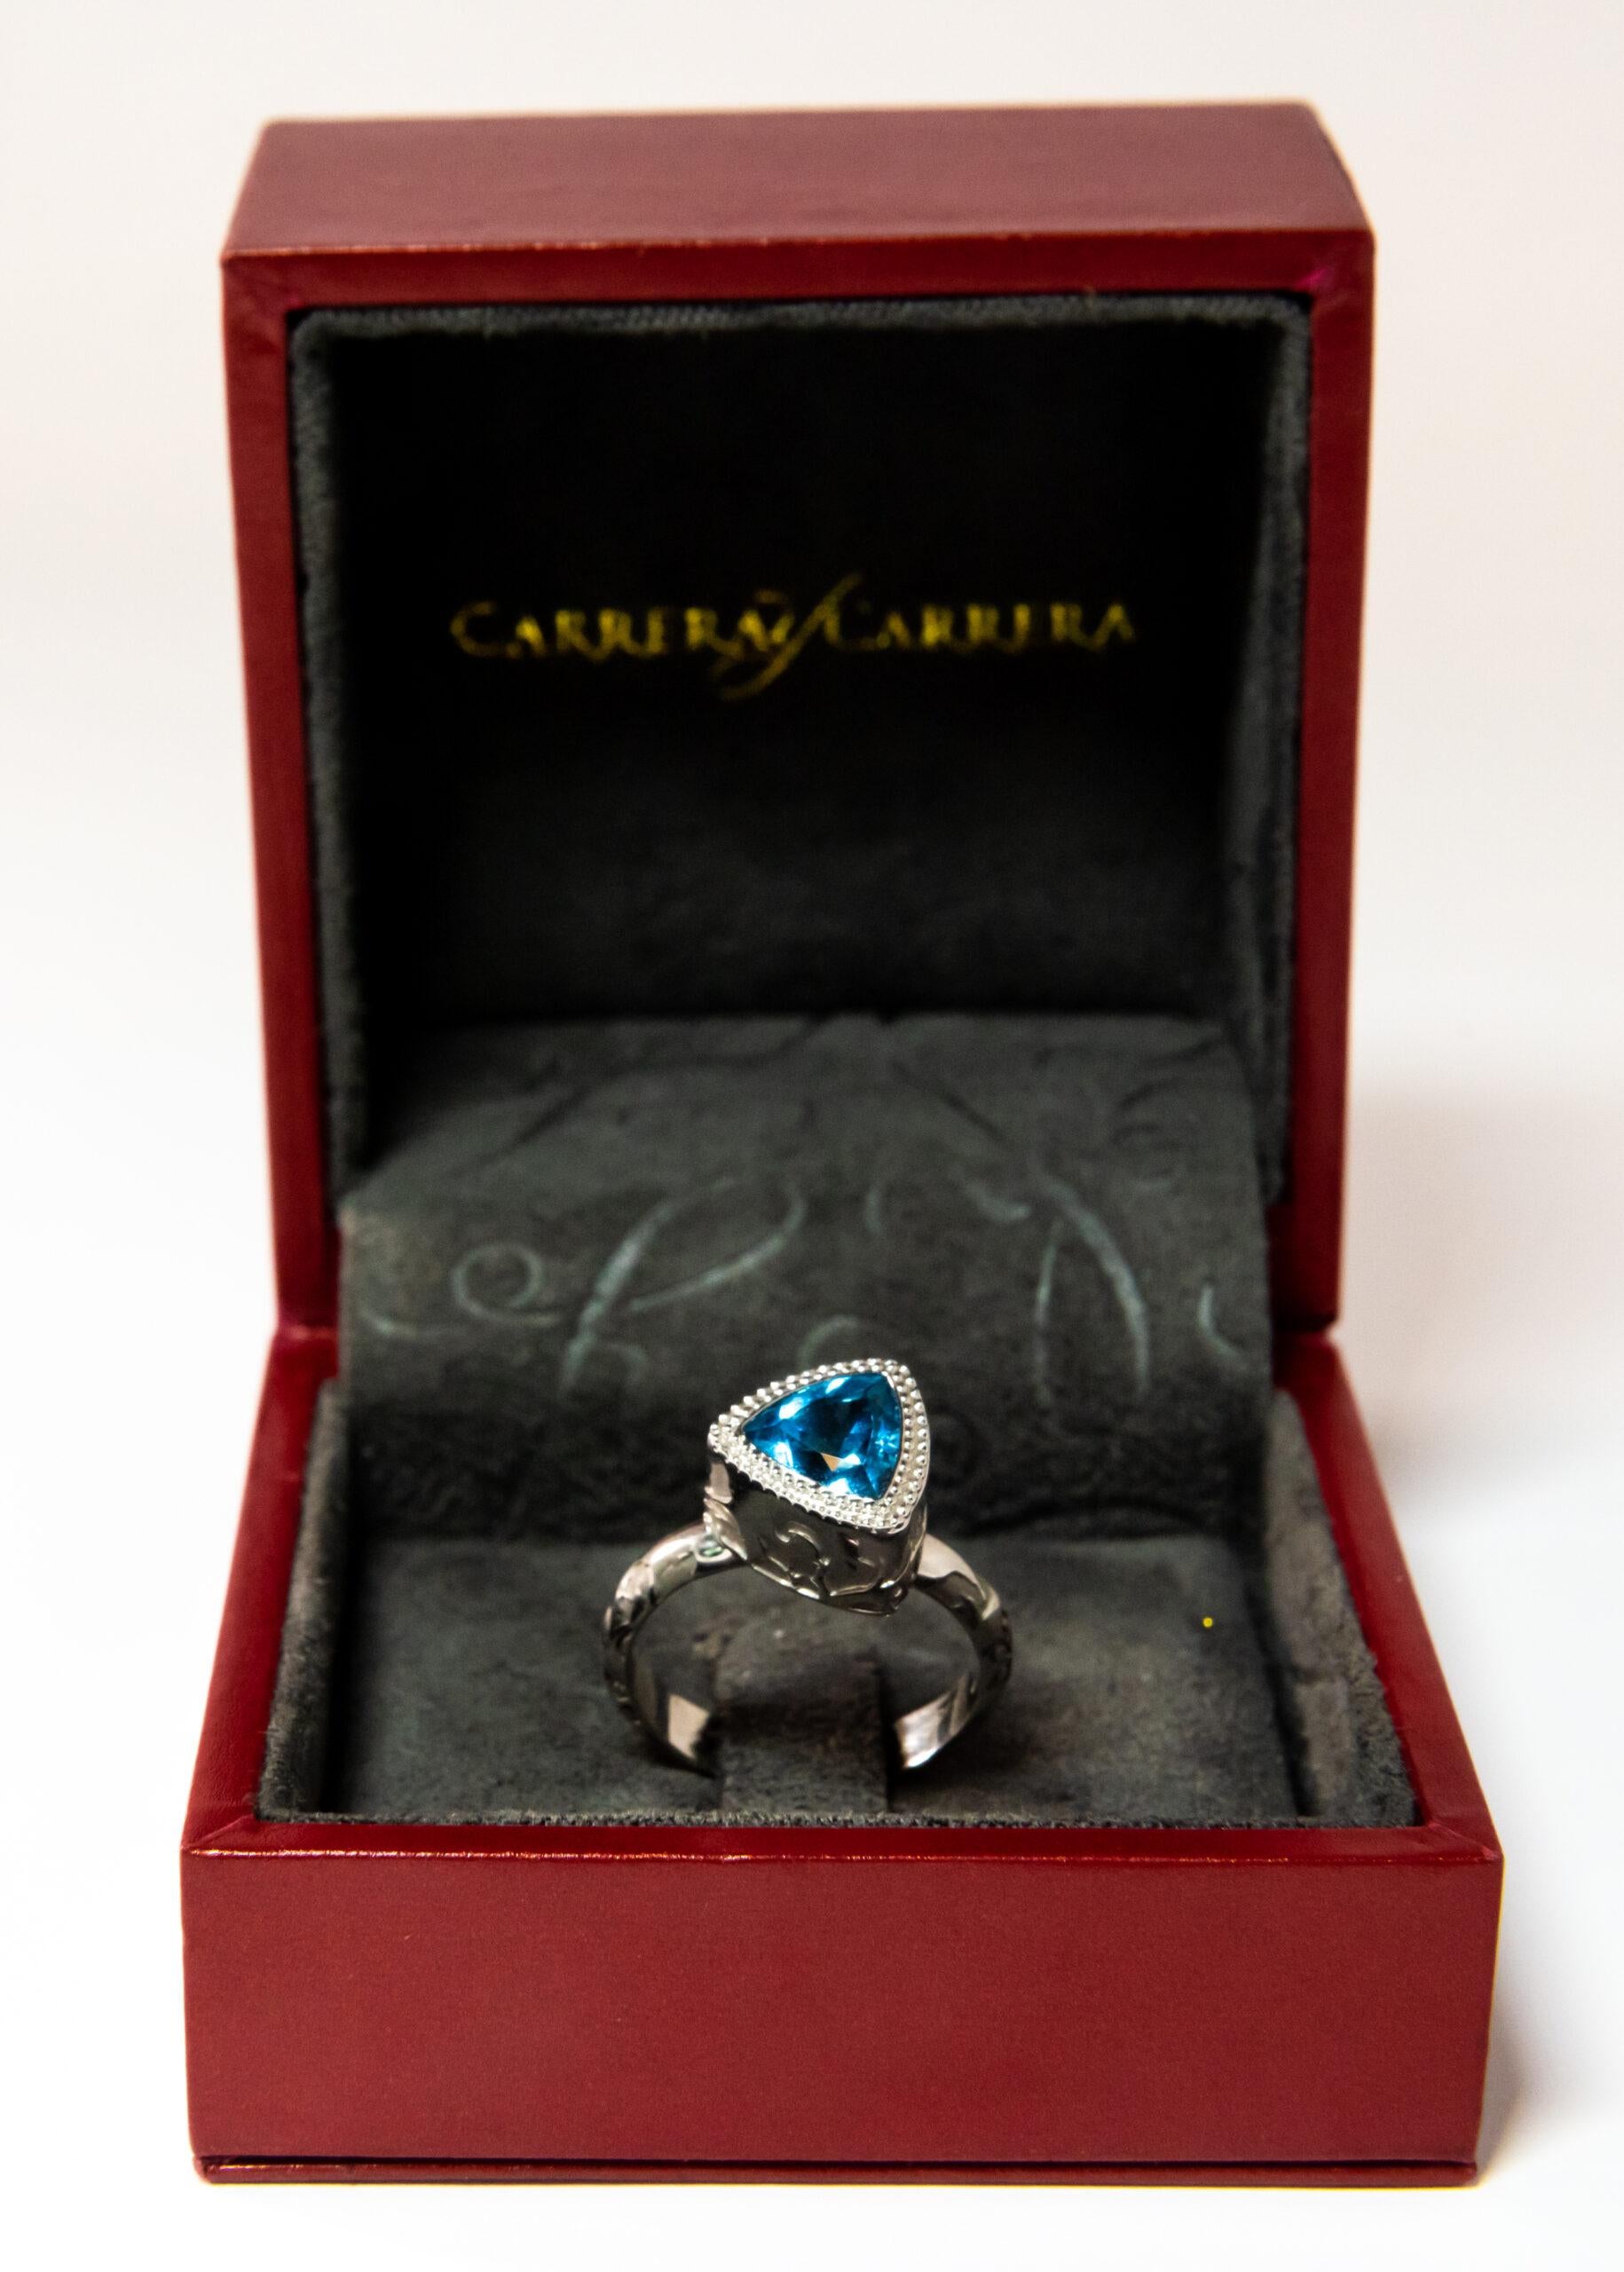 Carrara Y Carrara Velazquez 18k White Gold Diamond Ring, 10076514 For Sale 1